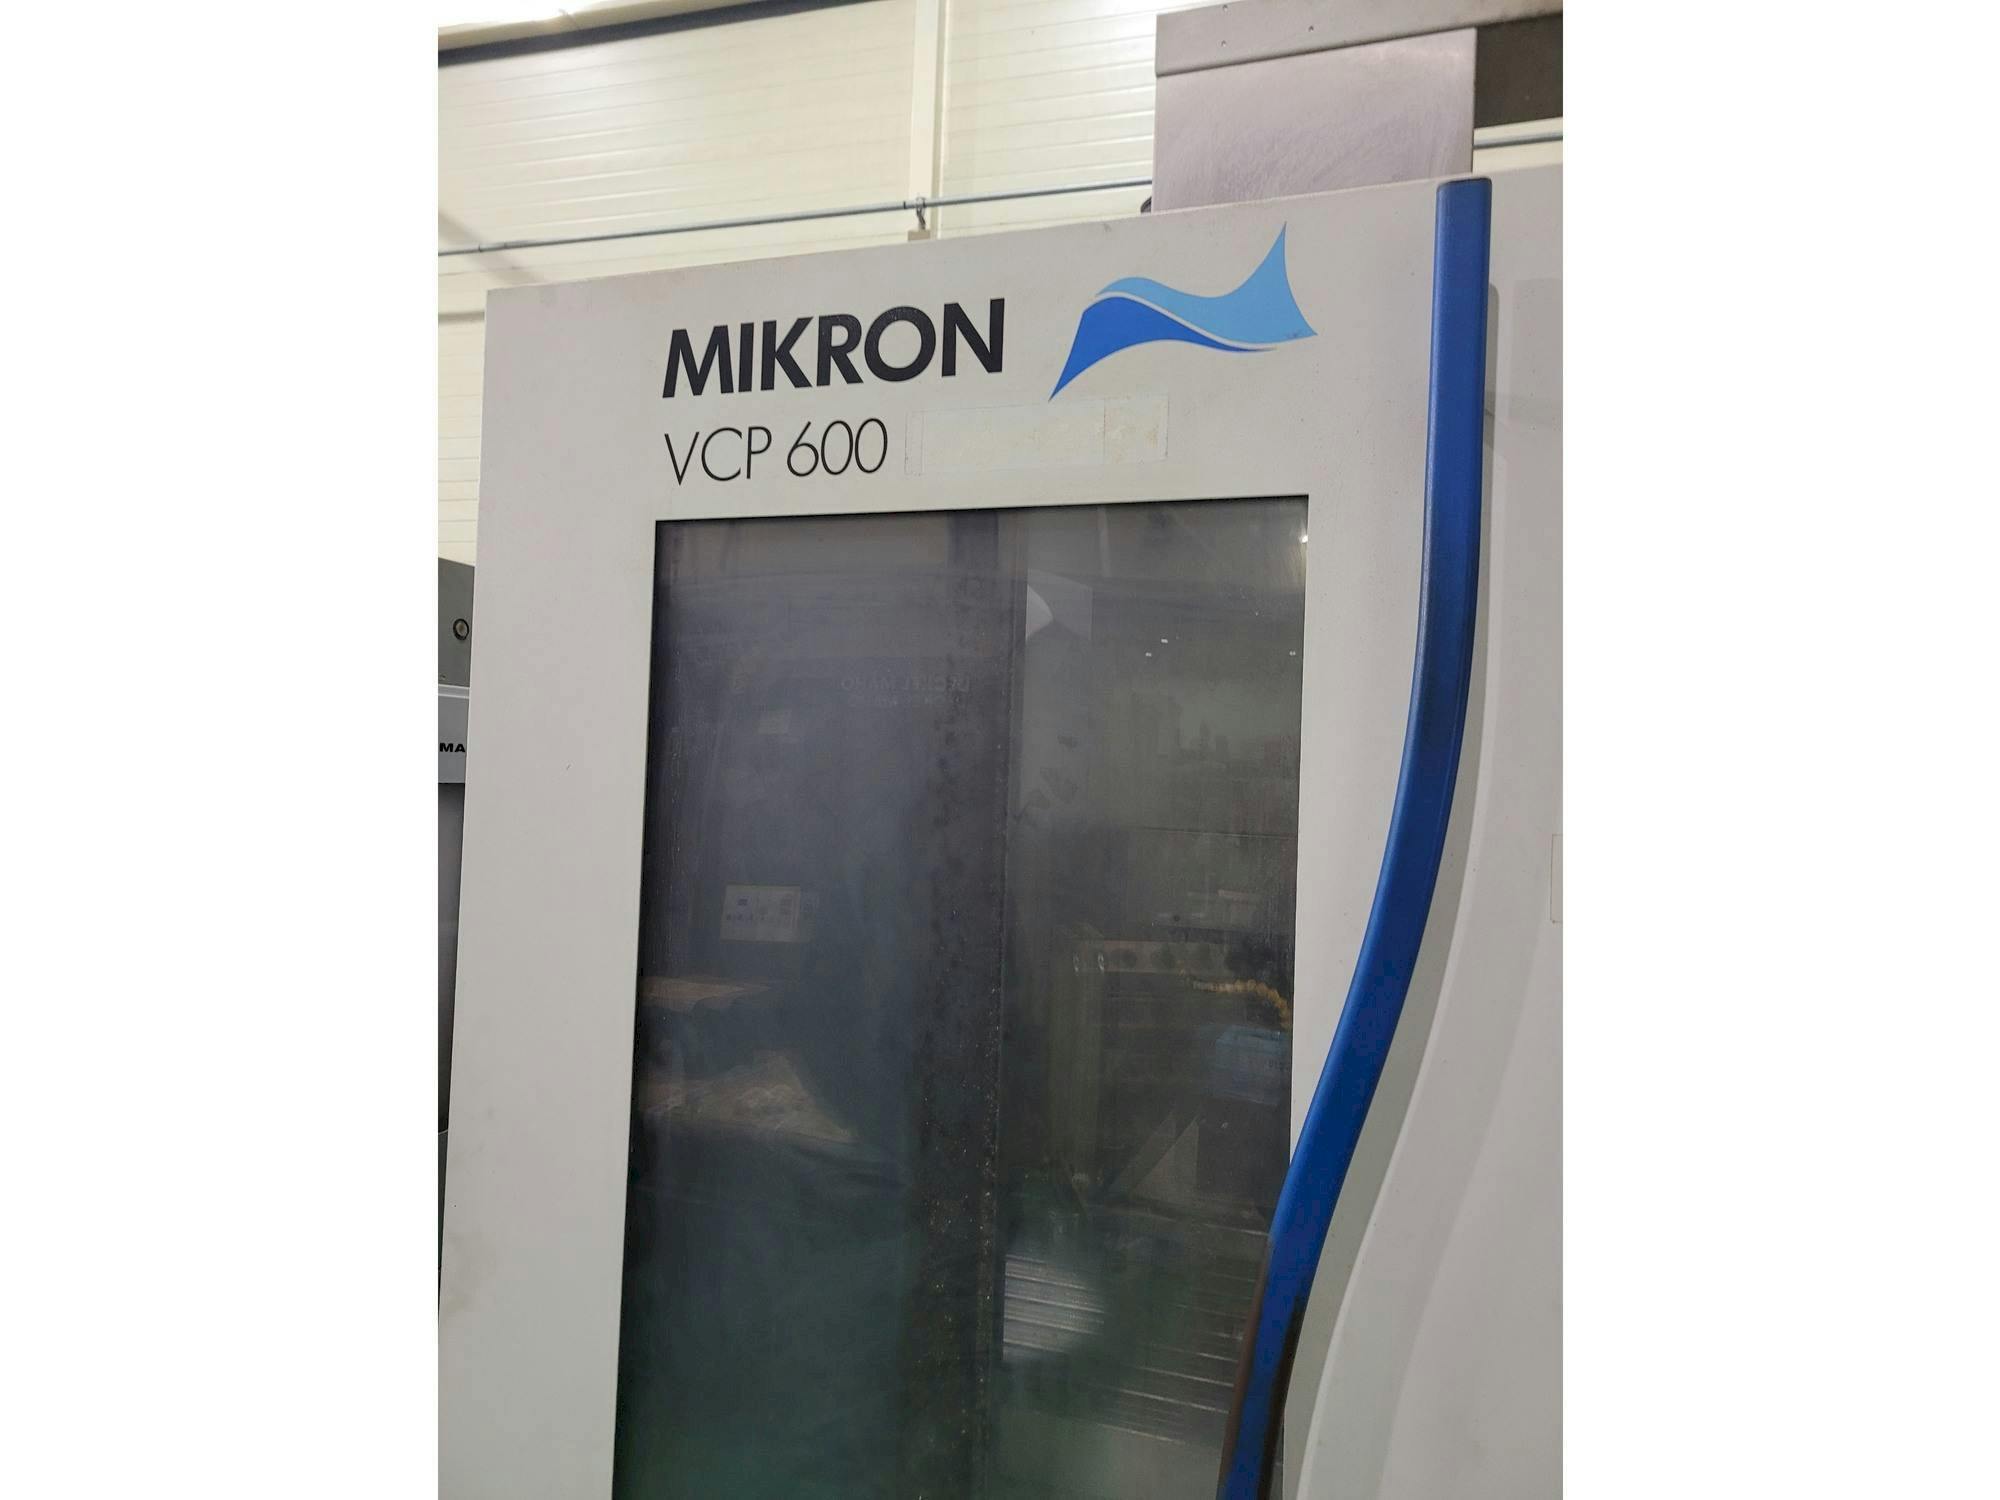 Prikaz  stroja MIKRON VCP 600  sprijeda